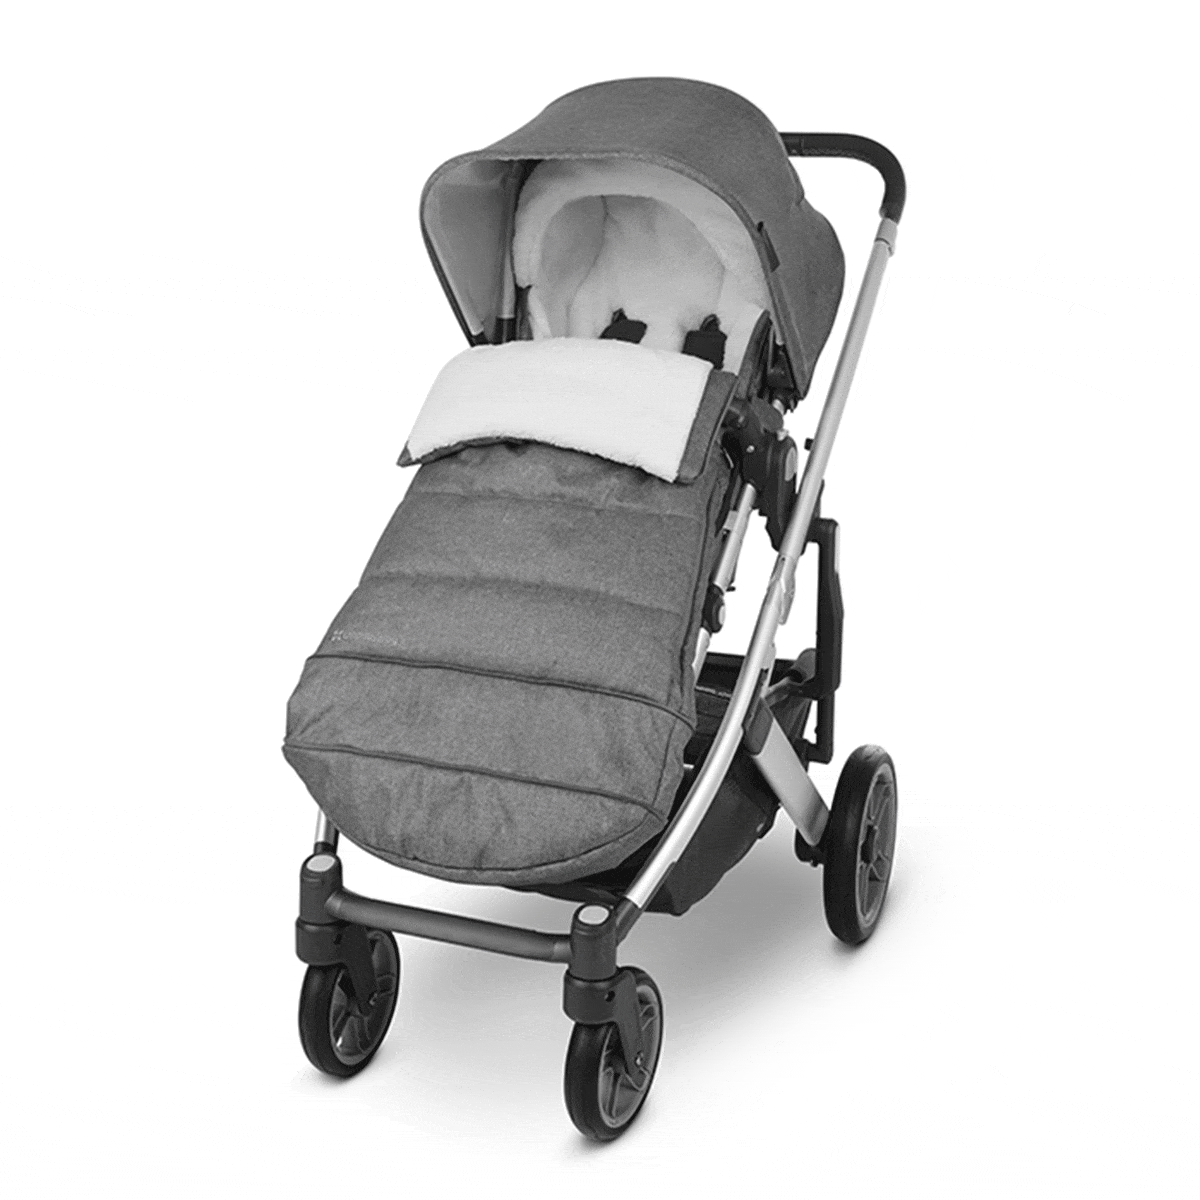 UPPAbaby stroller accessory UPPAbaby CozyGanoosh Footmuff - Jordan/Greyson